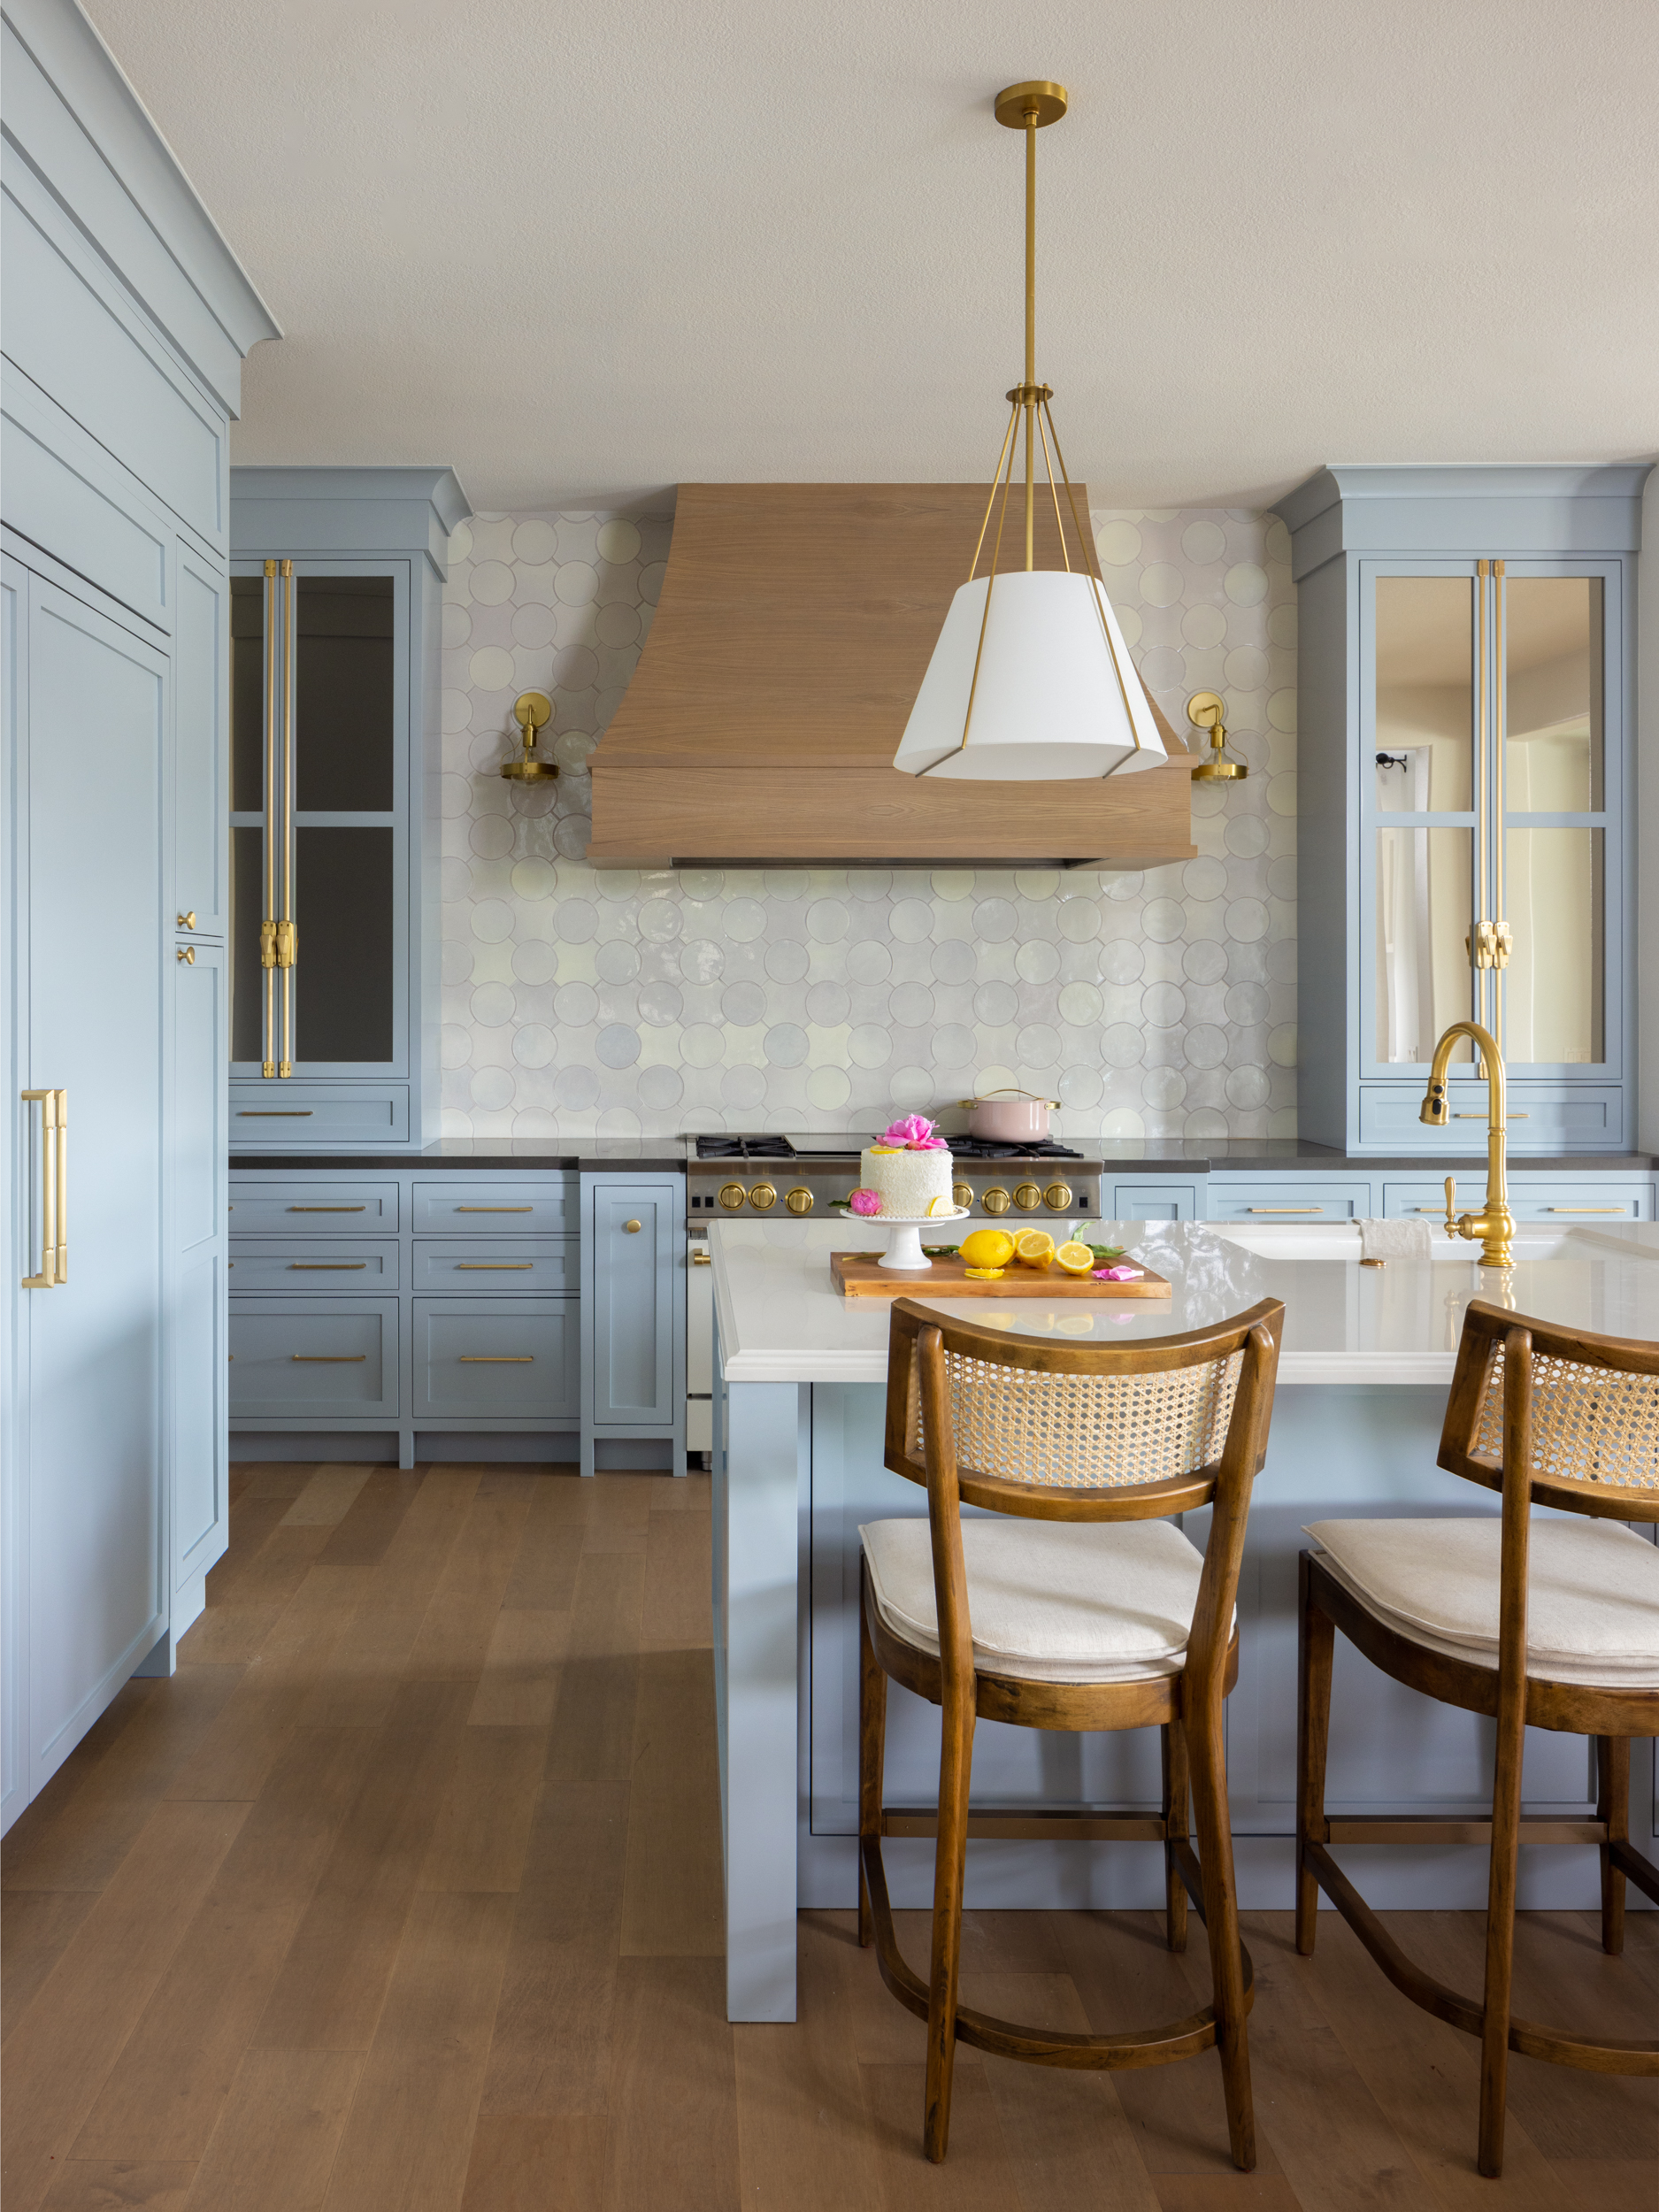 Parisian Lakes Kitchen renovation by Susan Wintersteen of San Diego design firm Savvy Interiors